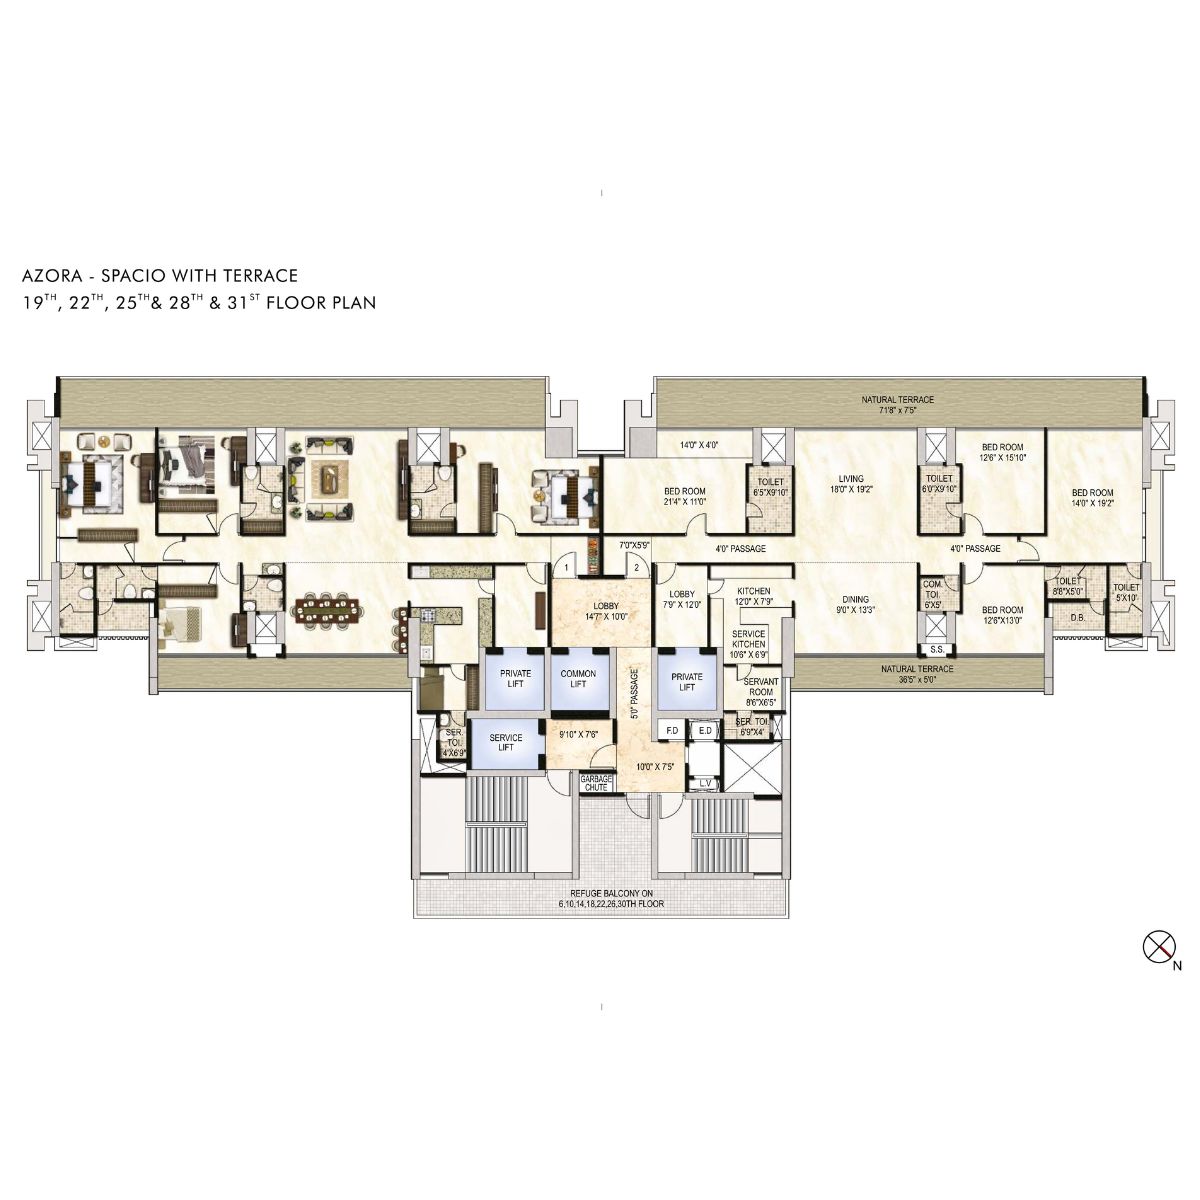 One-Akshar-Floor-Plan-Azora-Spacio-With-Terrace-19th-22th-25th-&-28th-&-31st